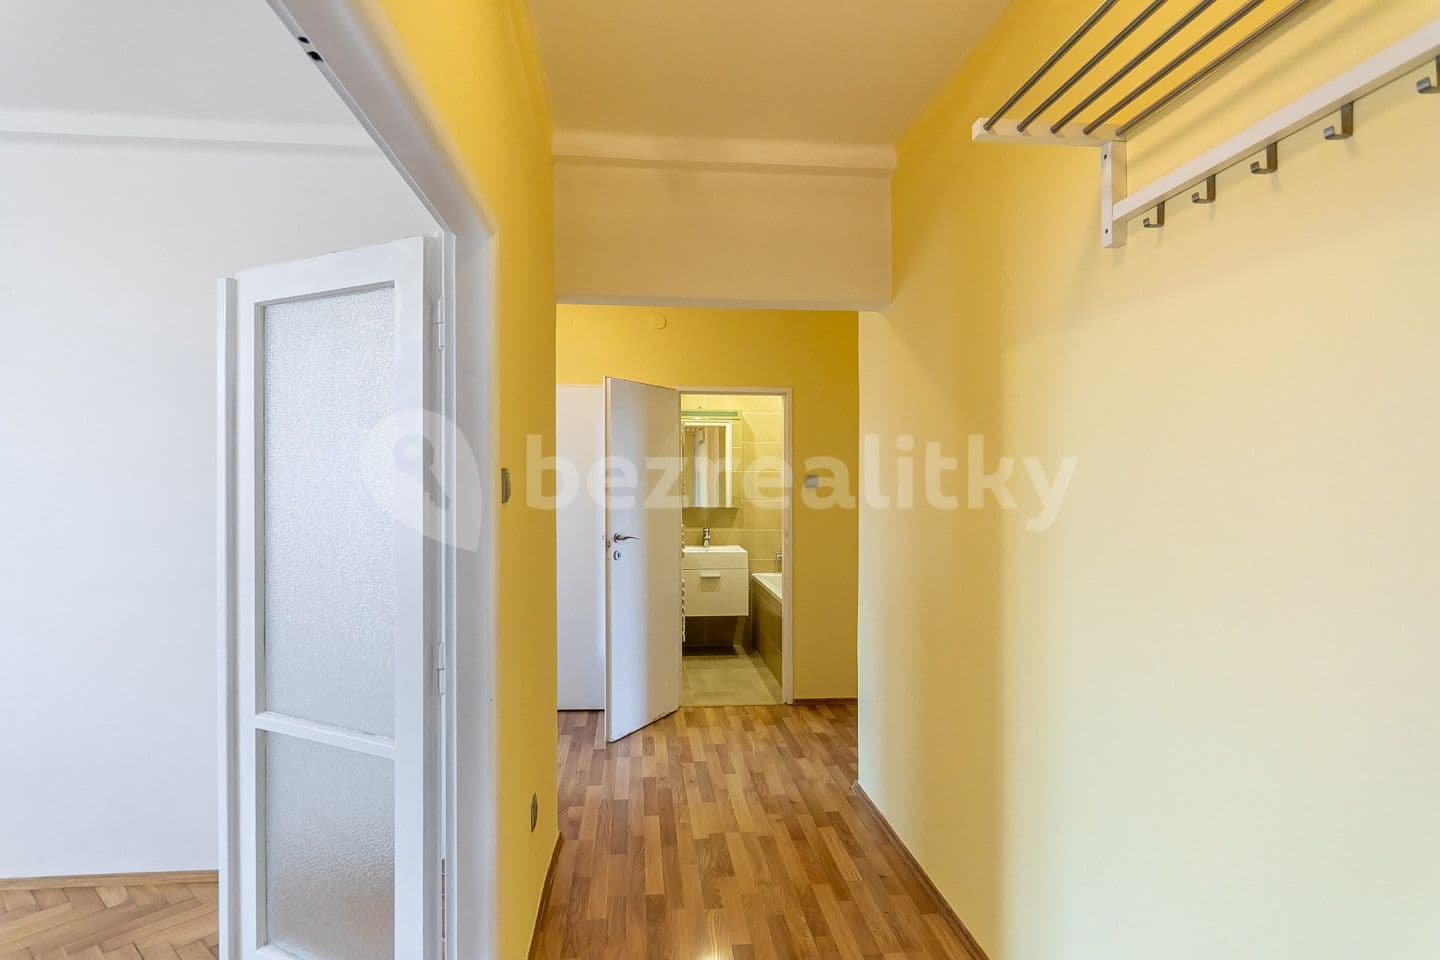 2 bedroom flat for sale, 60 m², Na Pile, Ústí nad Labem, Ústecký Region